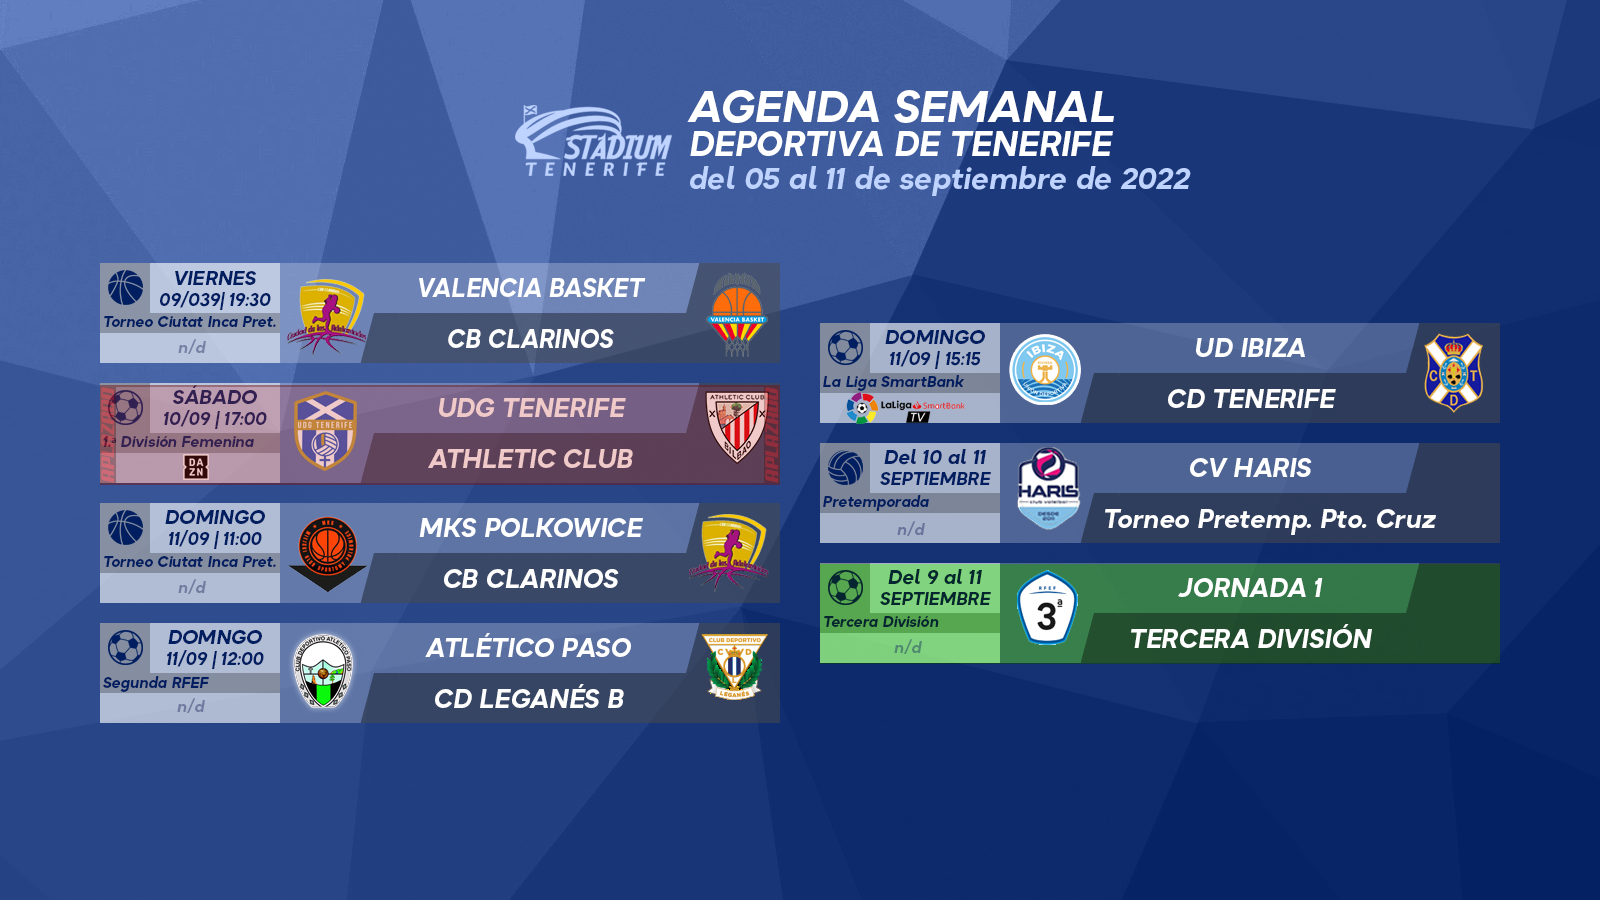 Agenda Semanal Deportiva de Tenerife (5 al 11 de septiembre de 2022)